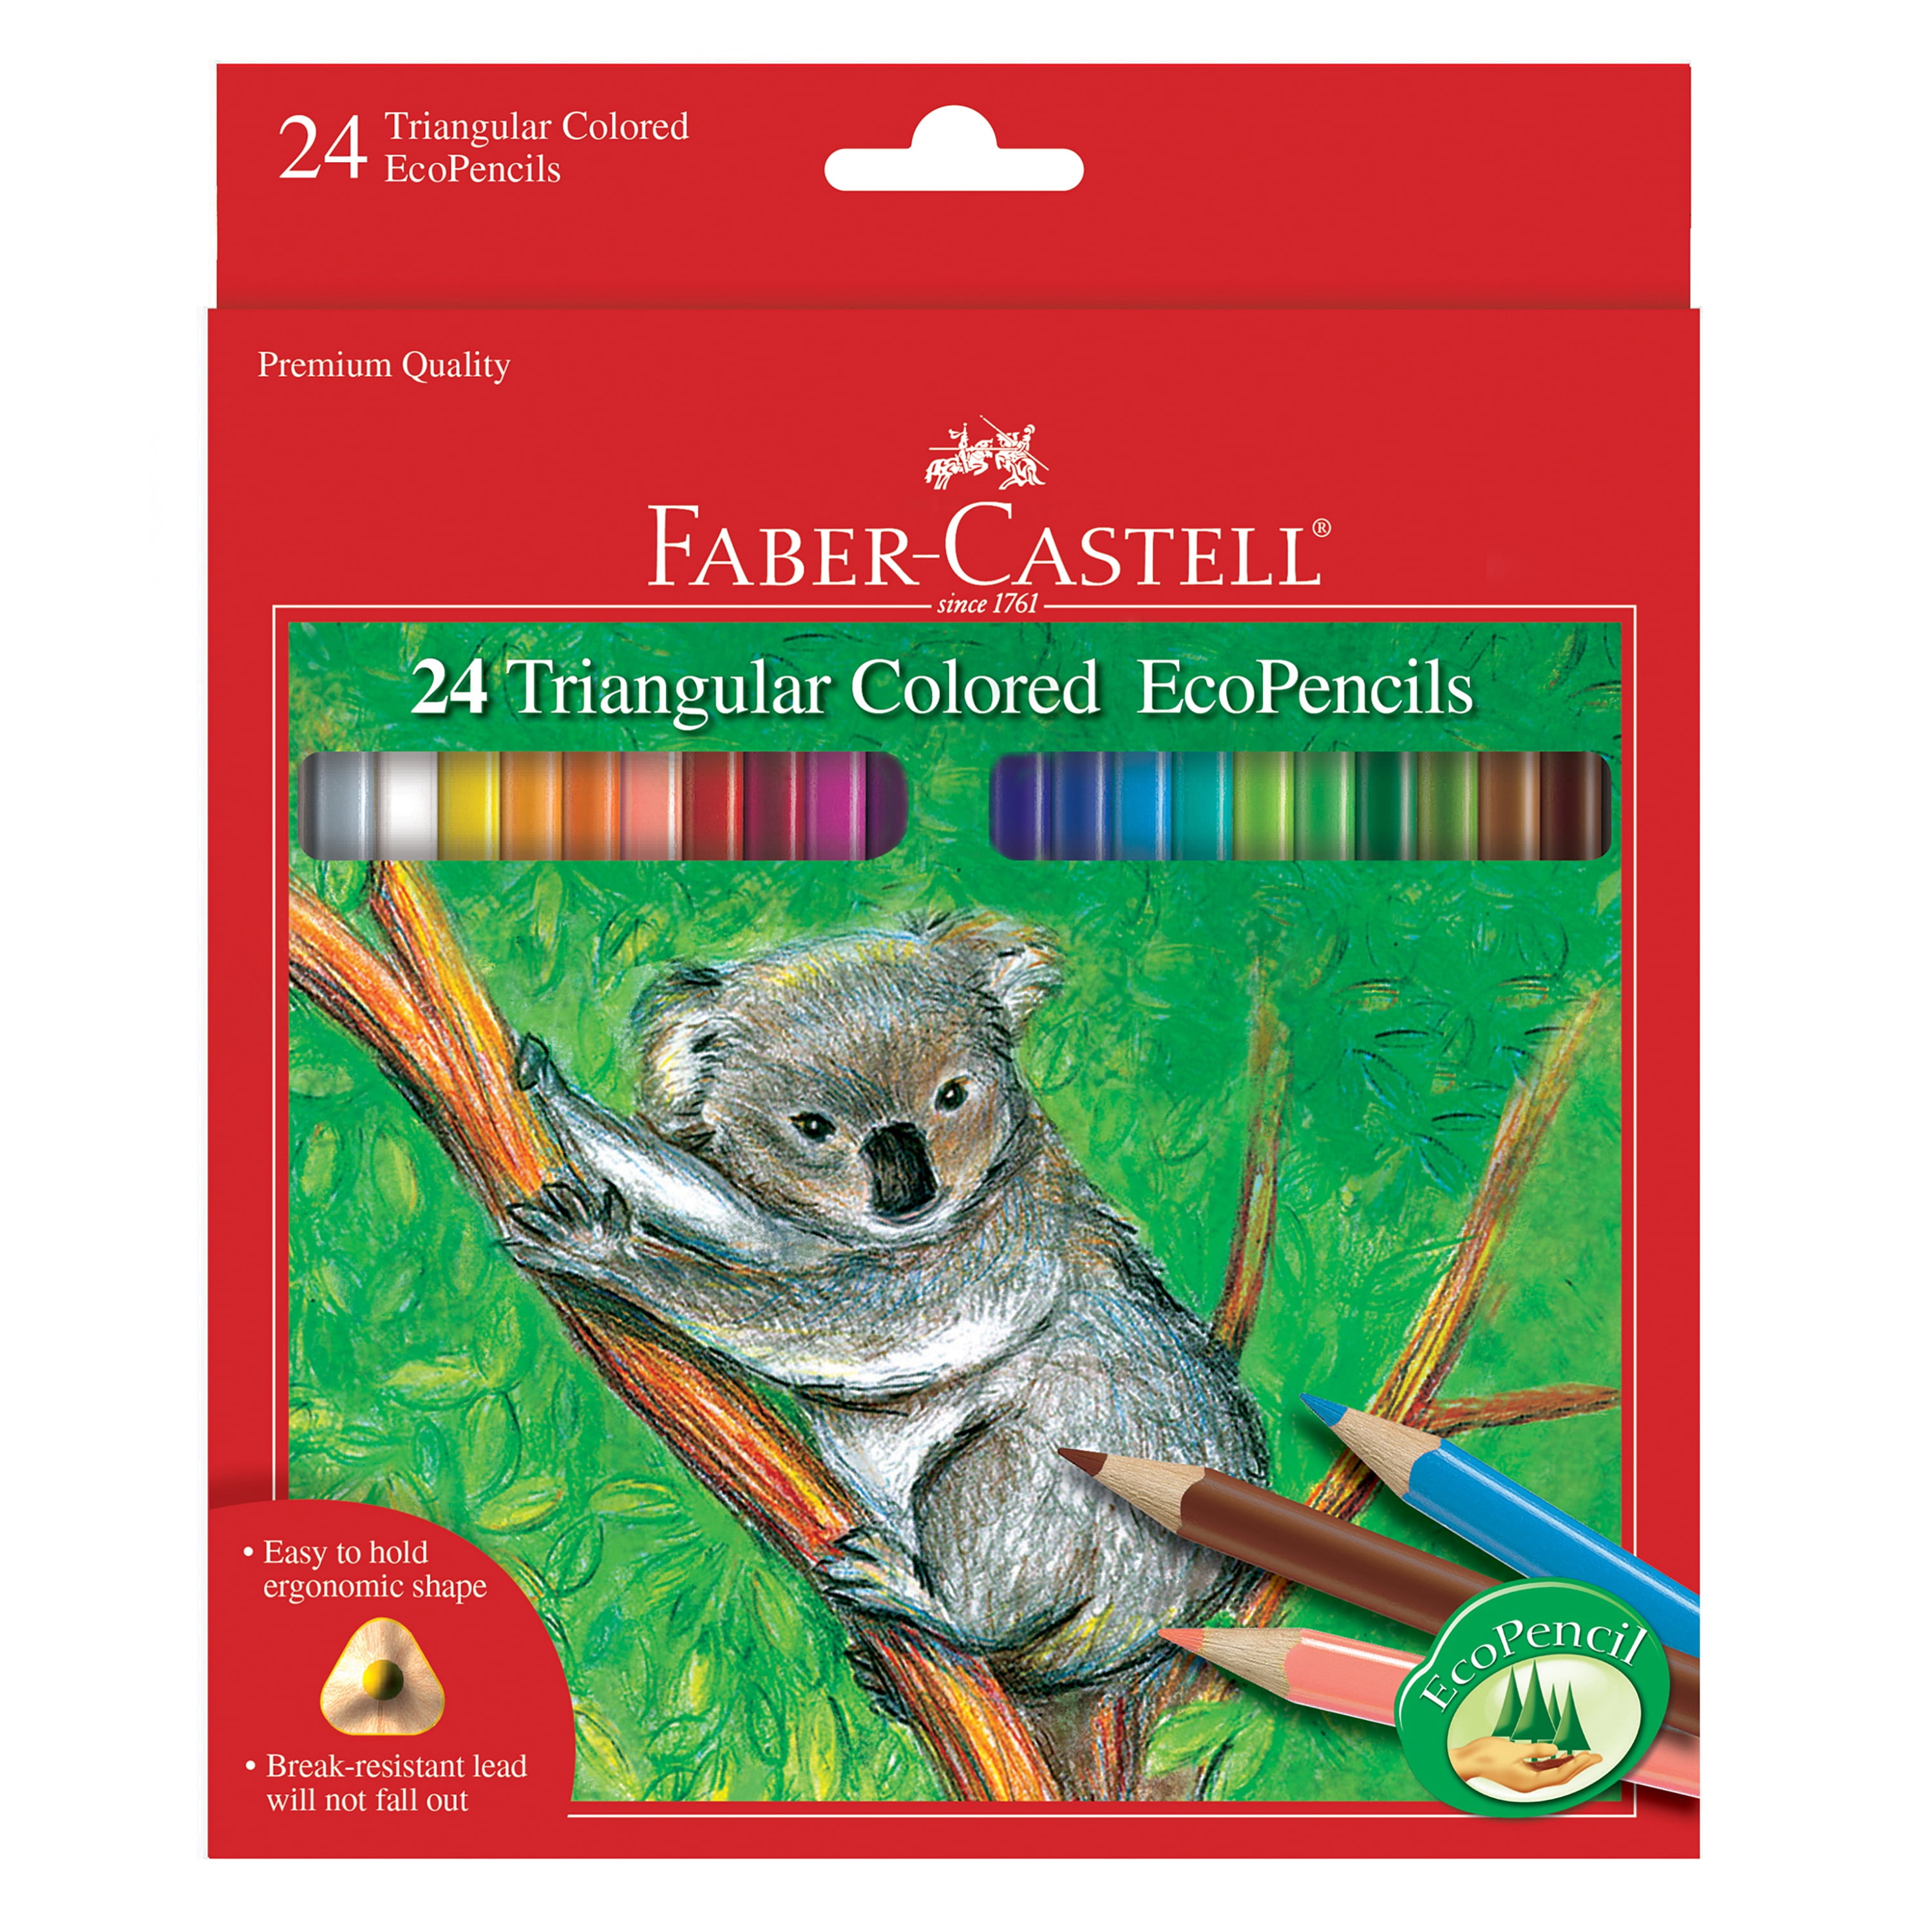 Faber-Castell Red Range Premium Children's Washable Markers